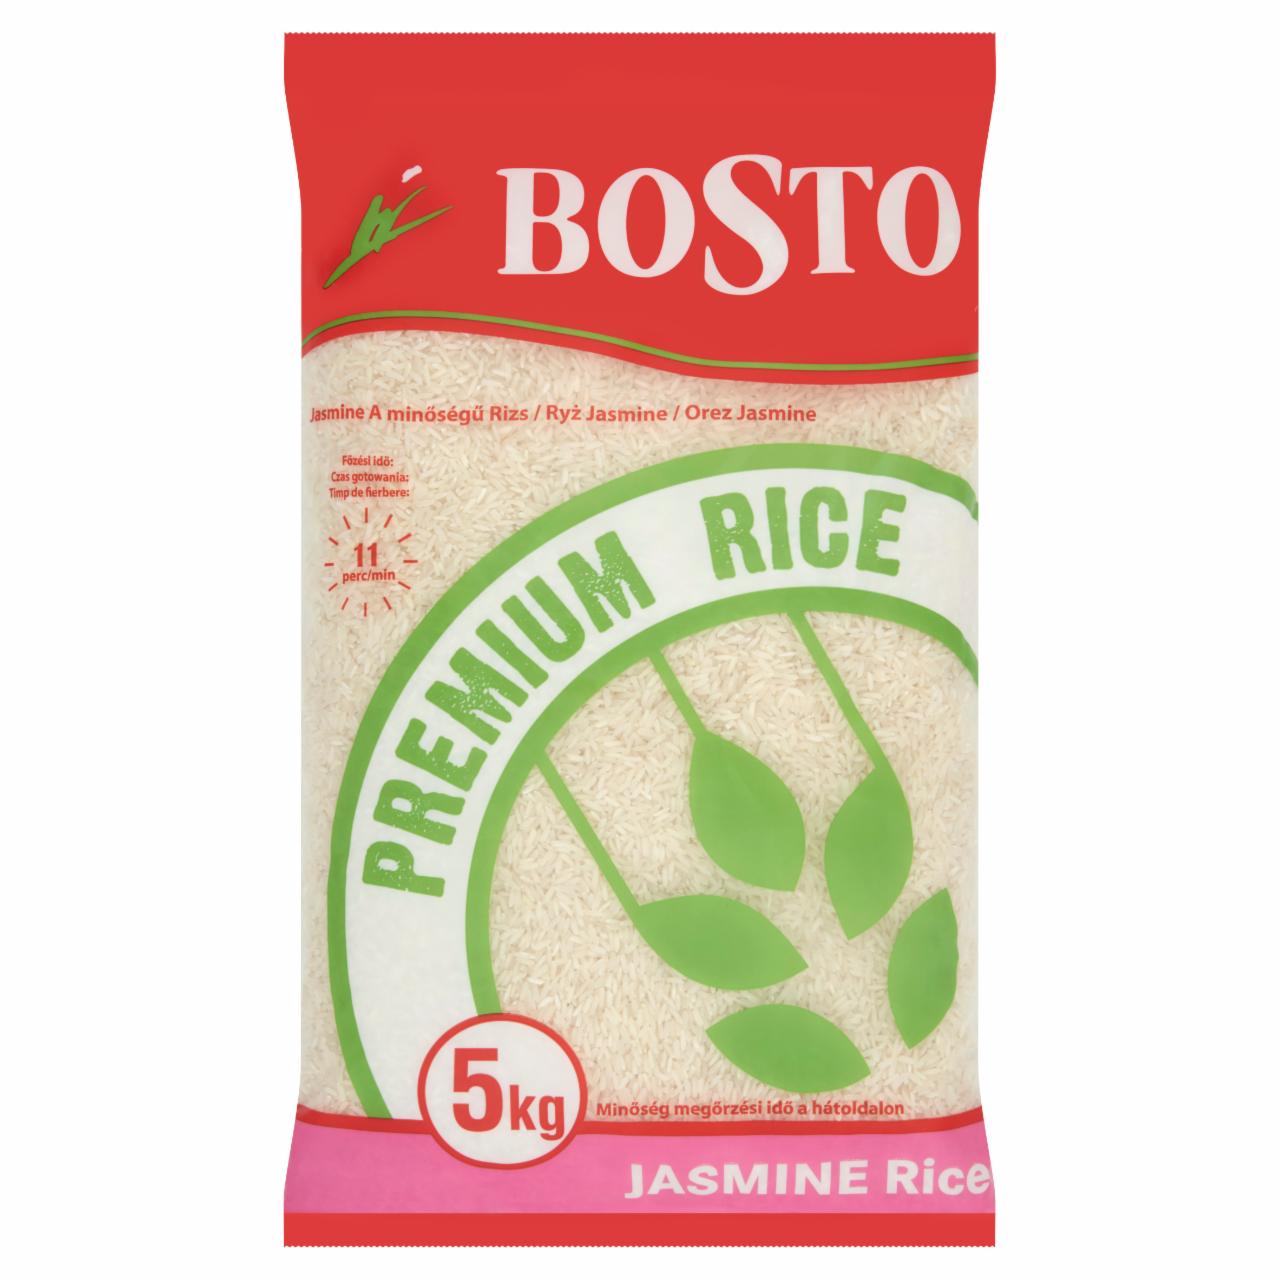 Képek - Bosto Jasmine rizs 5 kg